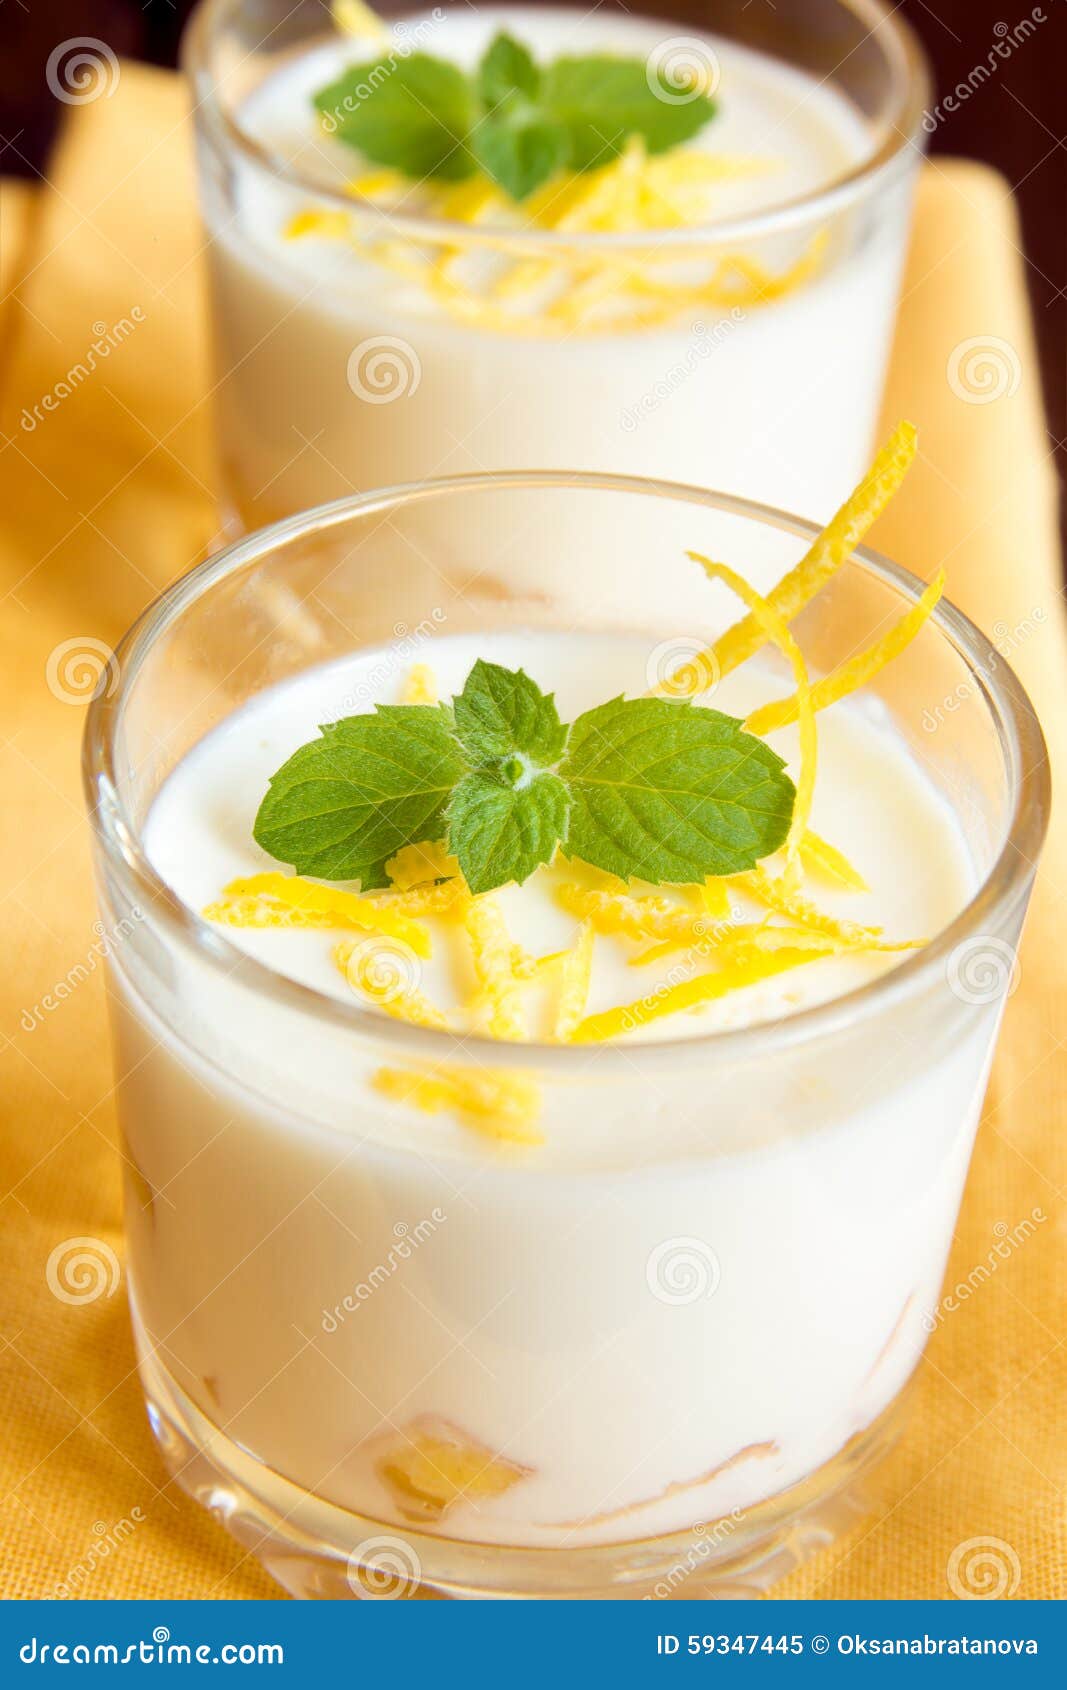 Vanilla Panna Cotta stock image. Image of food, background - 59347445